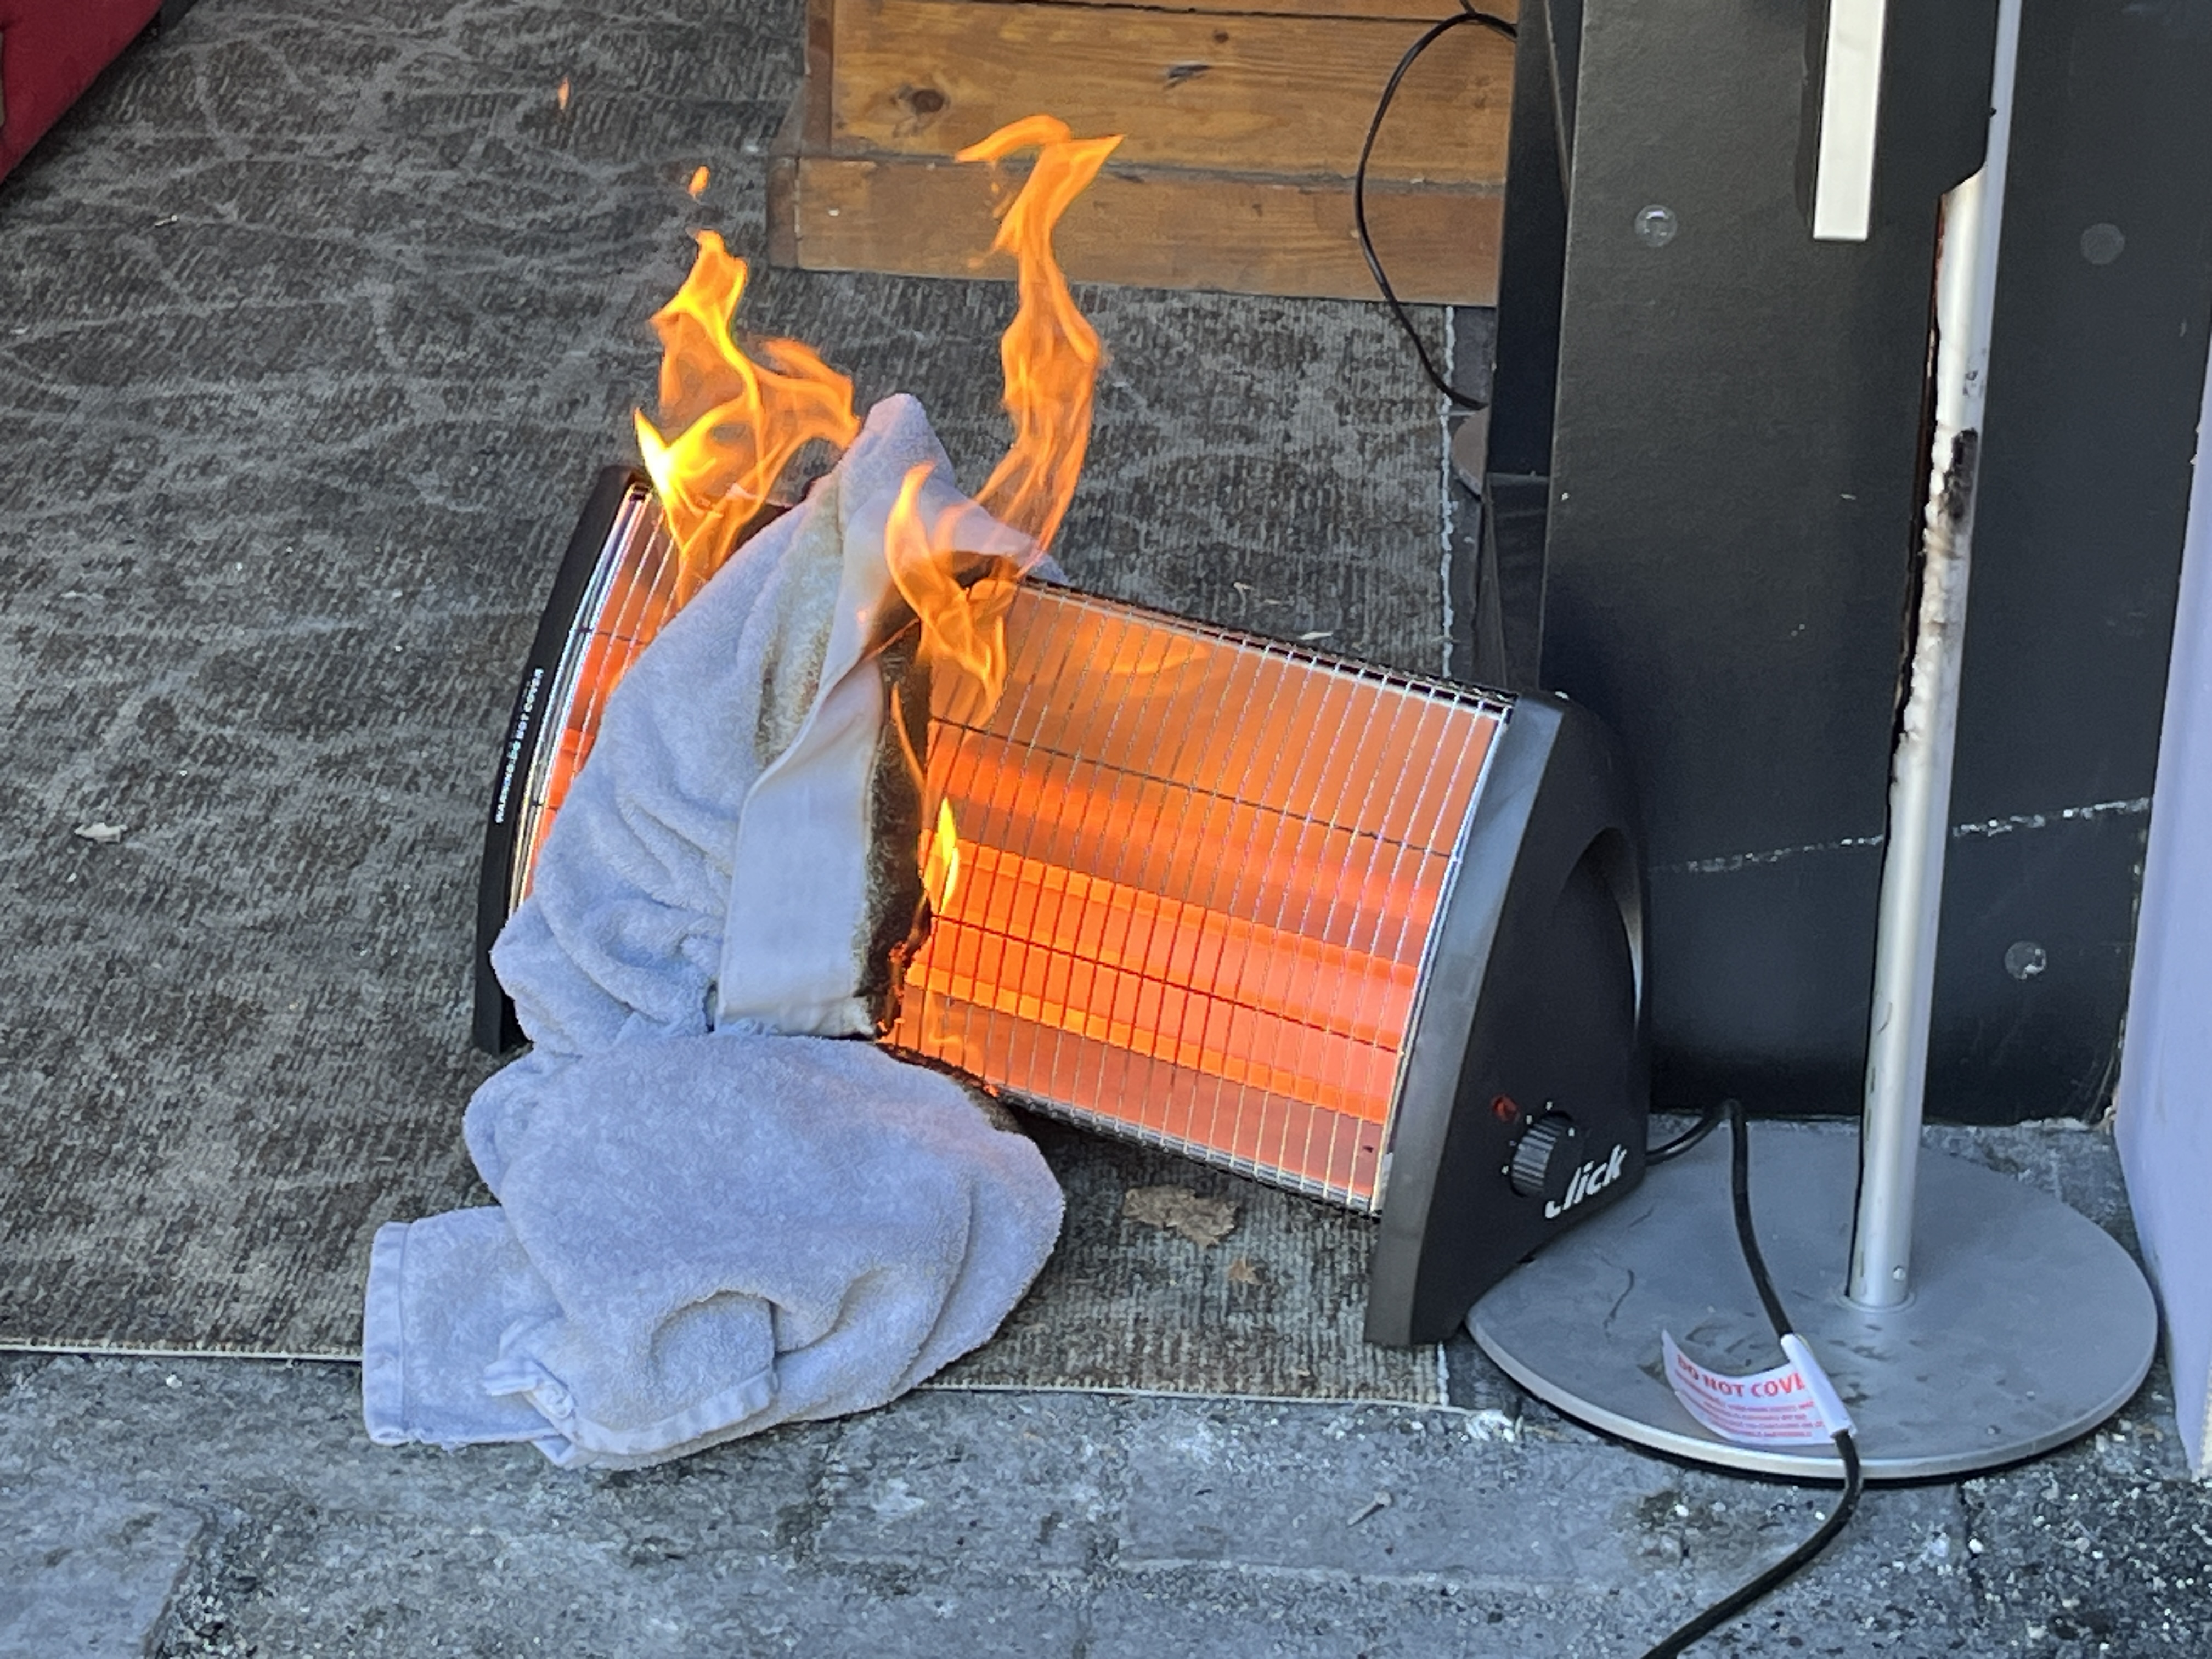 Heater on fire